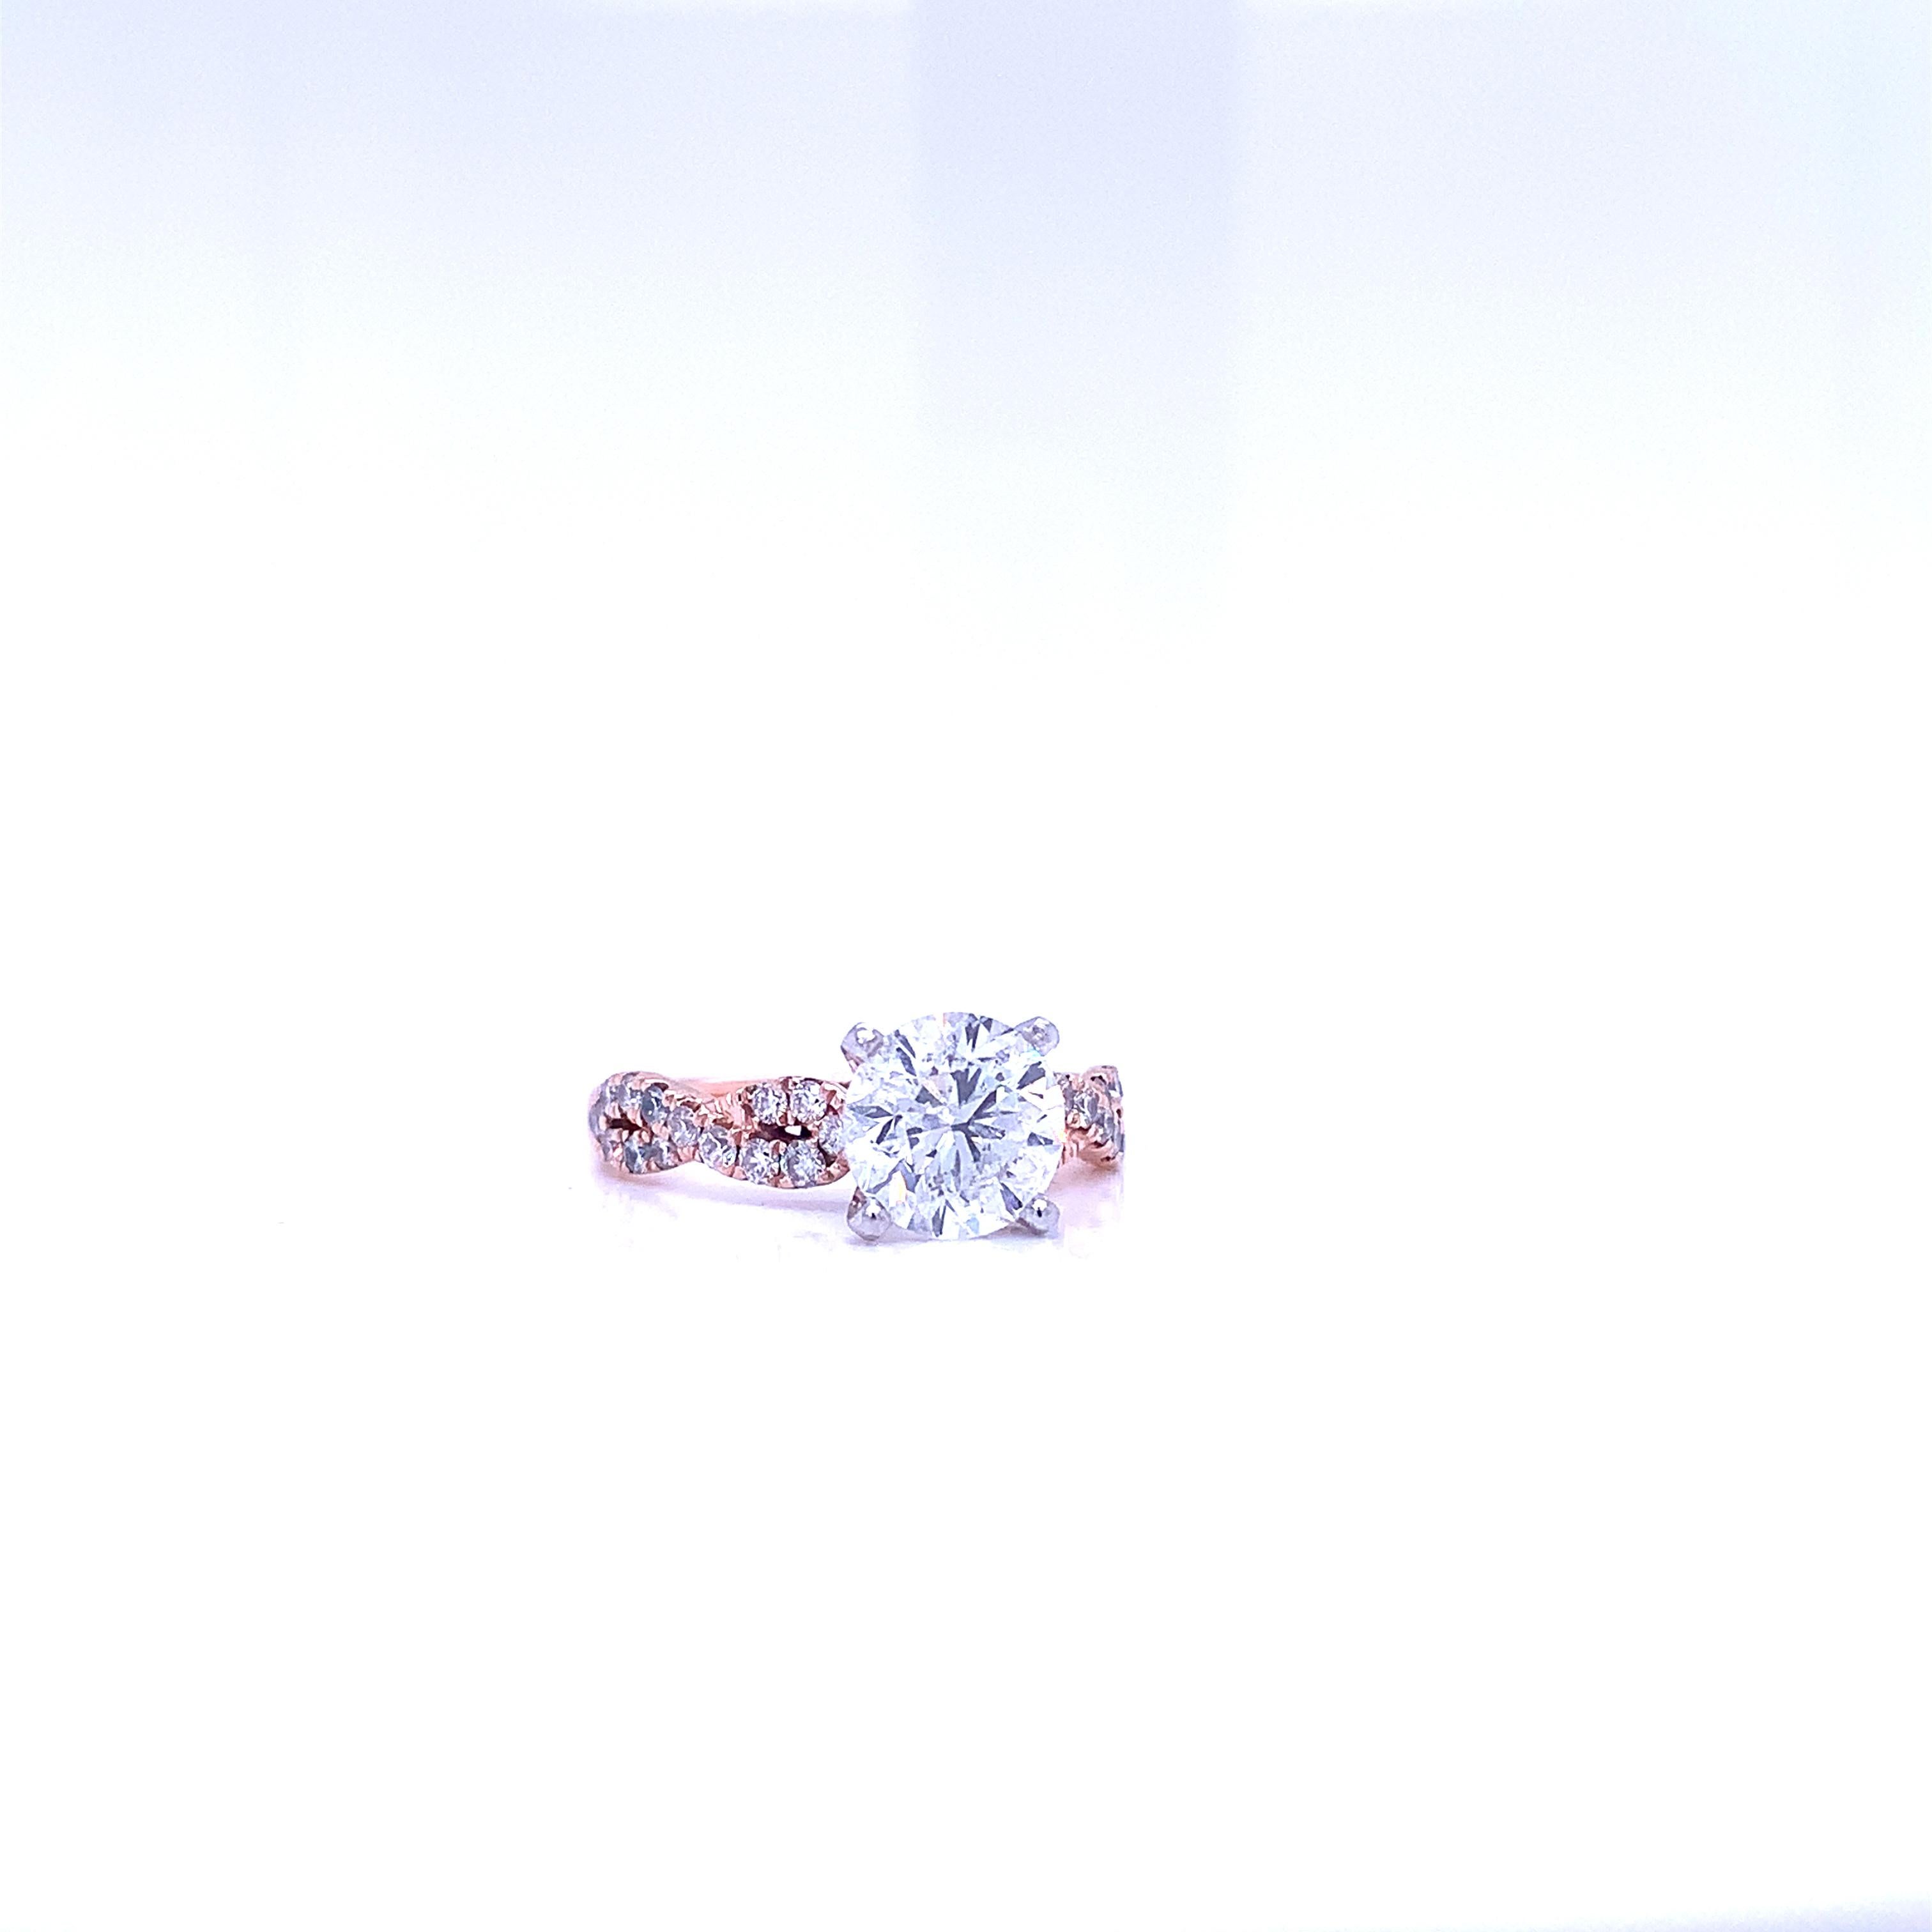 Round Cut Diamond 2.08 Carat Ring Set in 14k Rose Gold For Sale 3